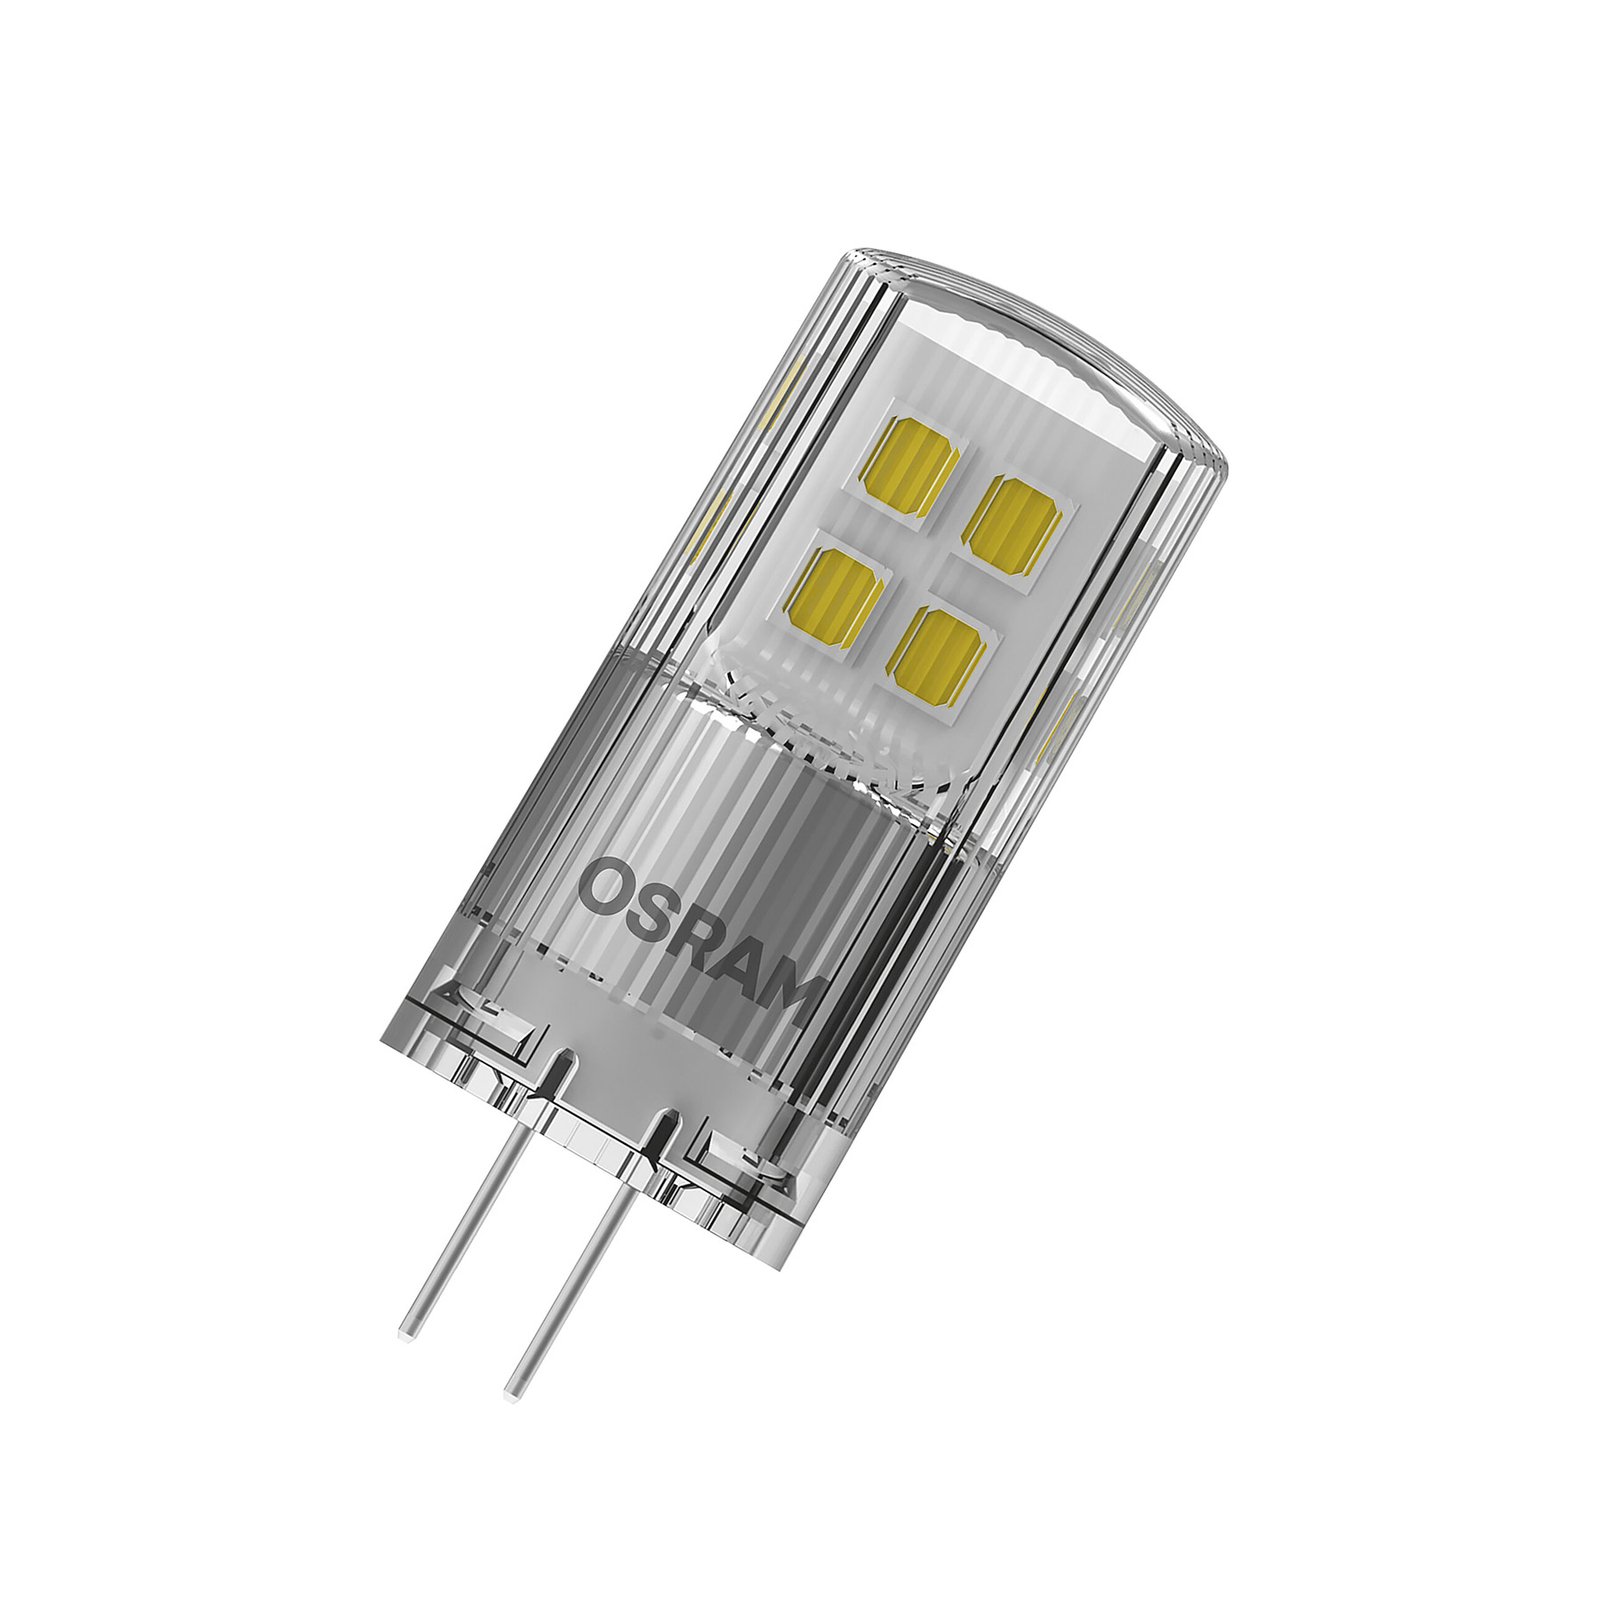 OSRAM PIN 12V LED bispina G4 2W 200lm dimming